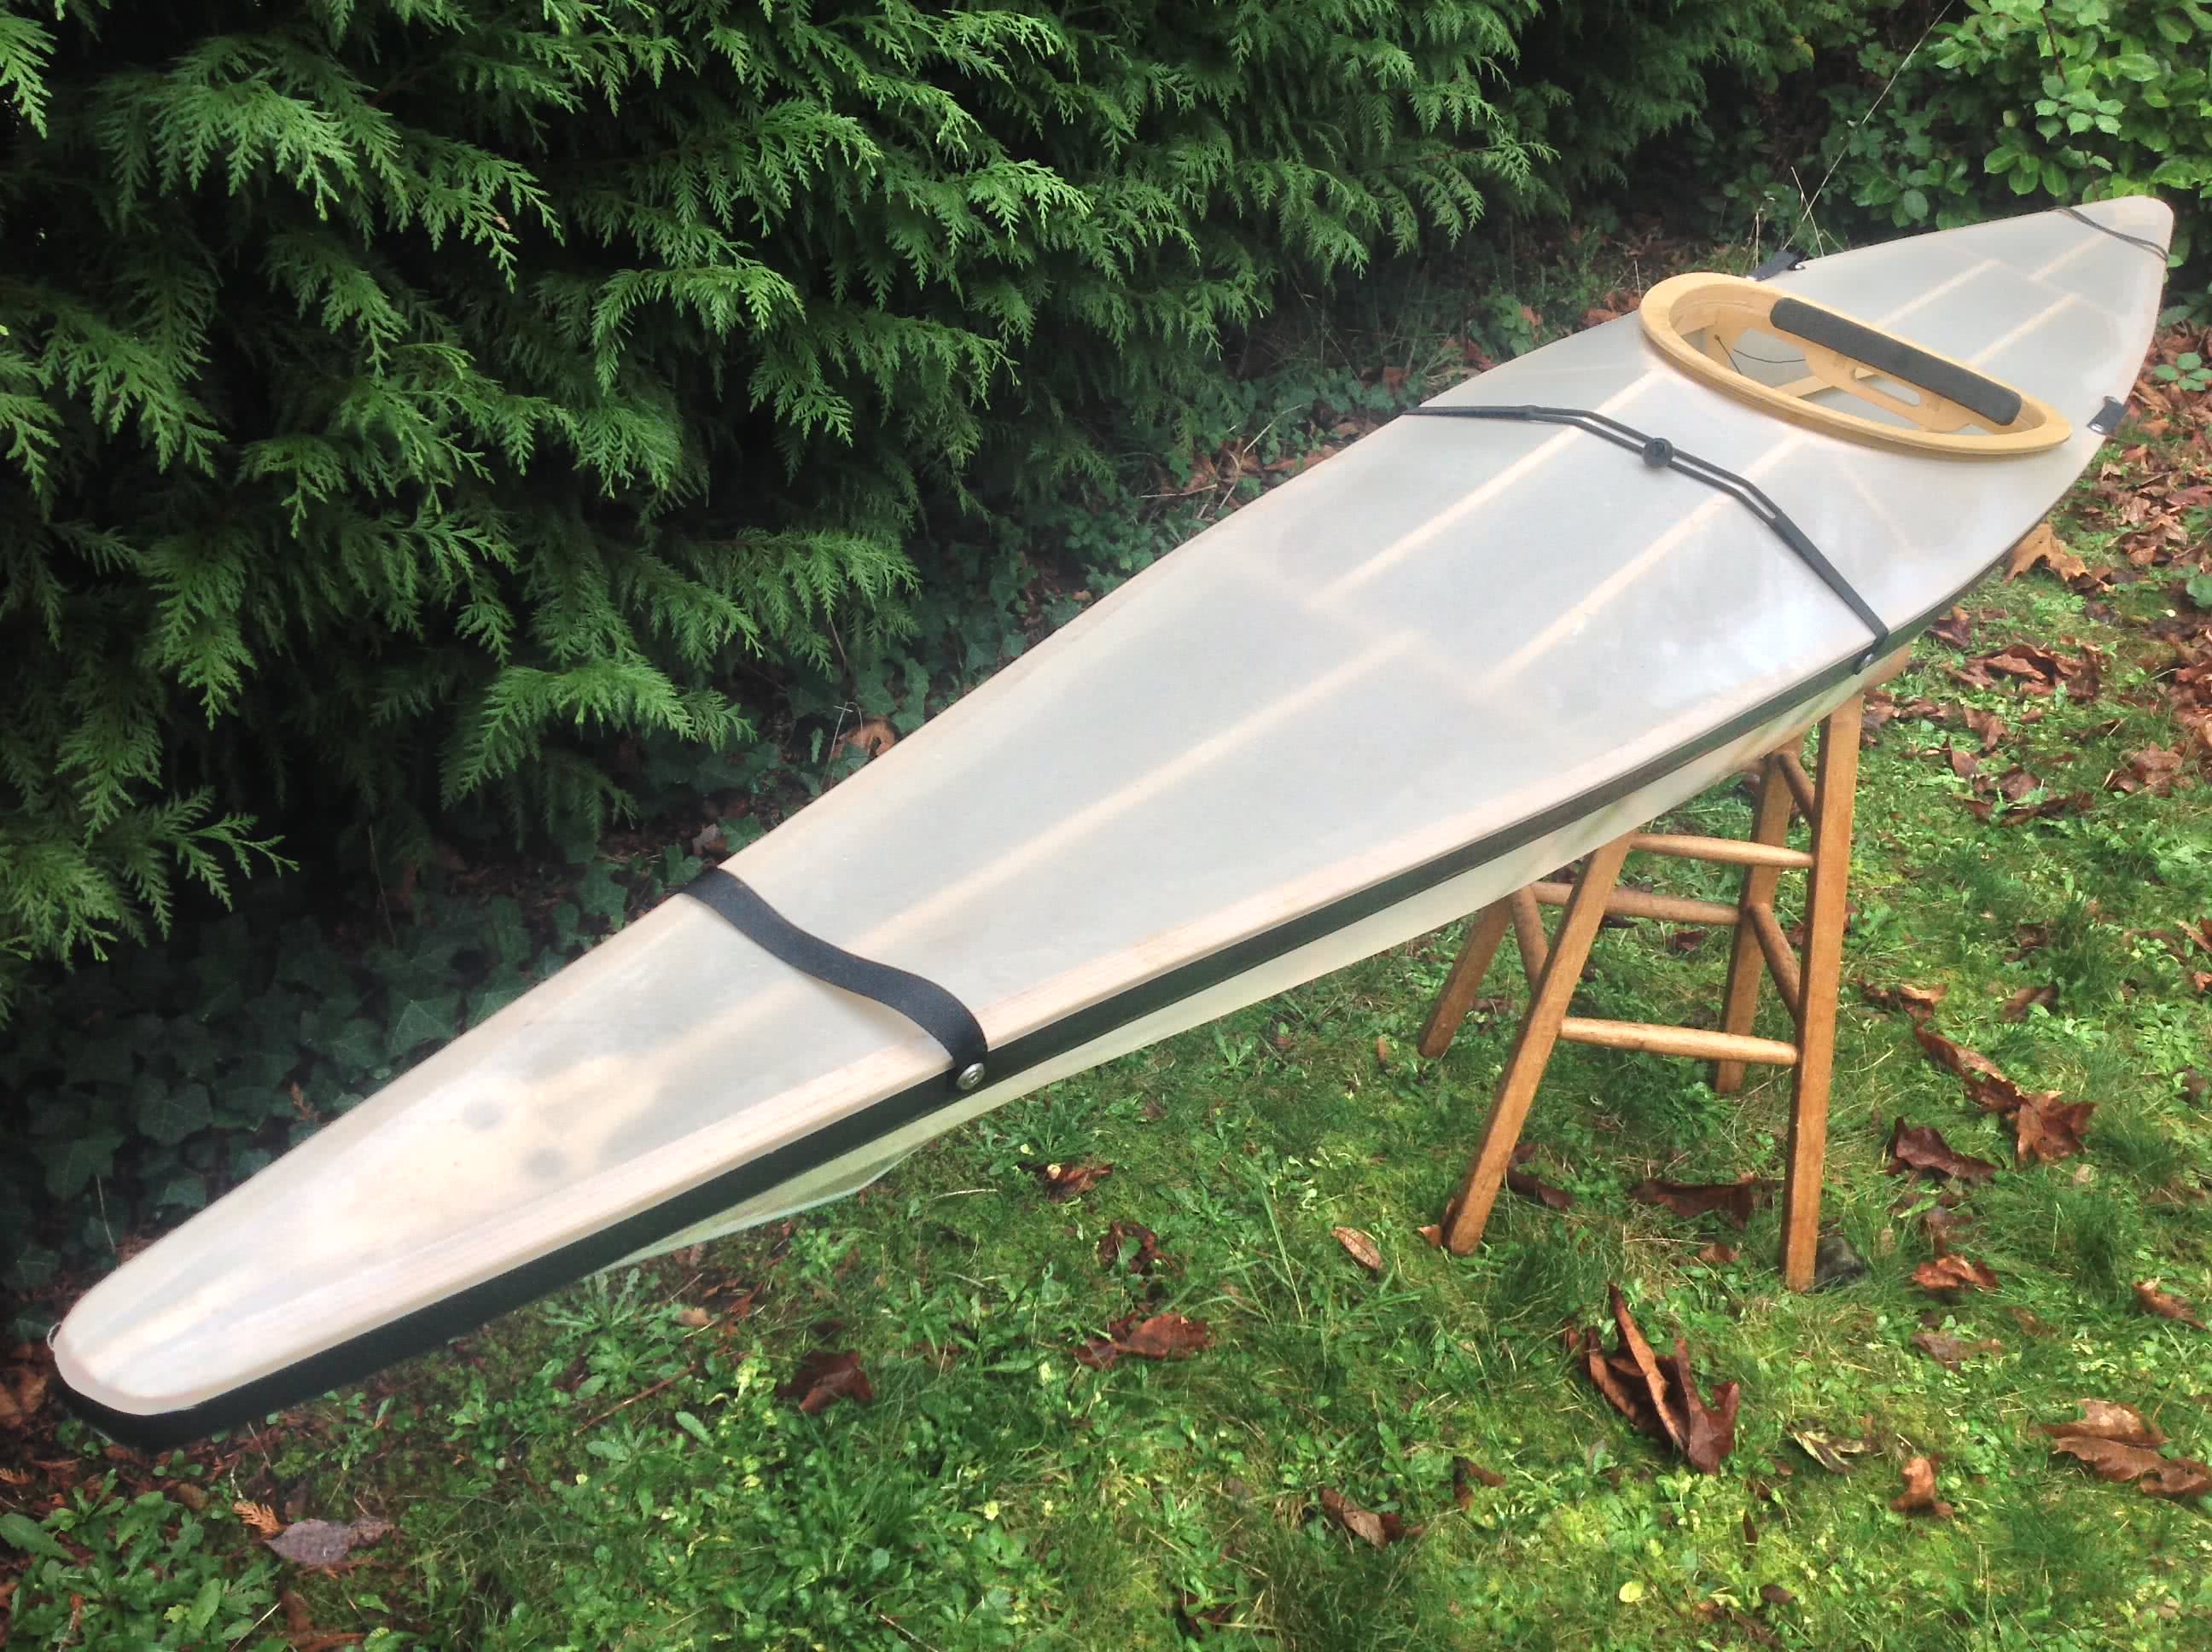 boat plans wooden kayak how to build diy pdf download uk